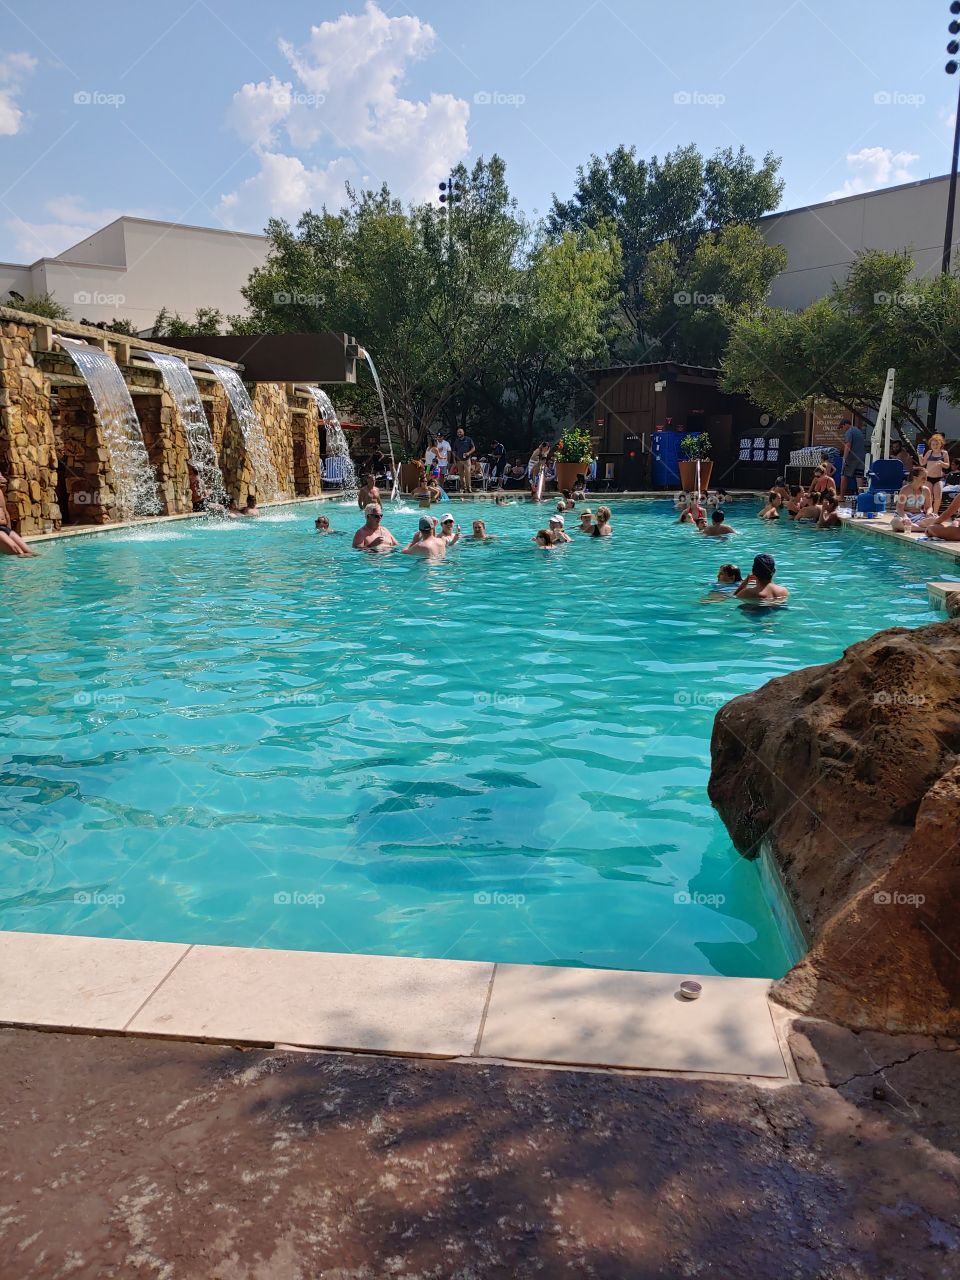 Gaylord pool